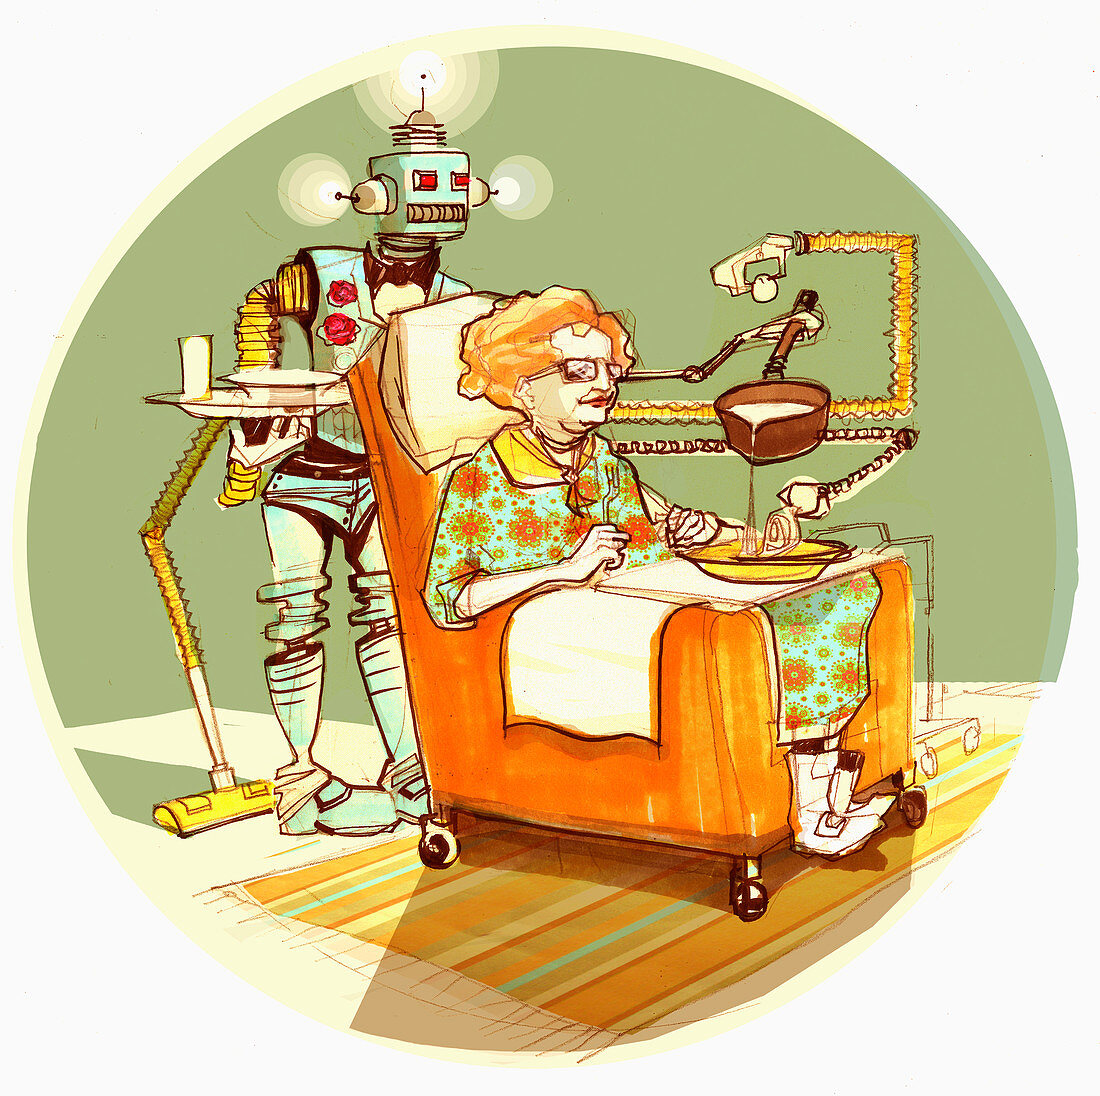 Robot serving old woman soup, illustration